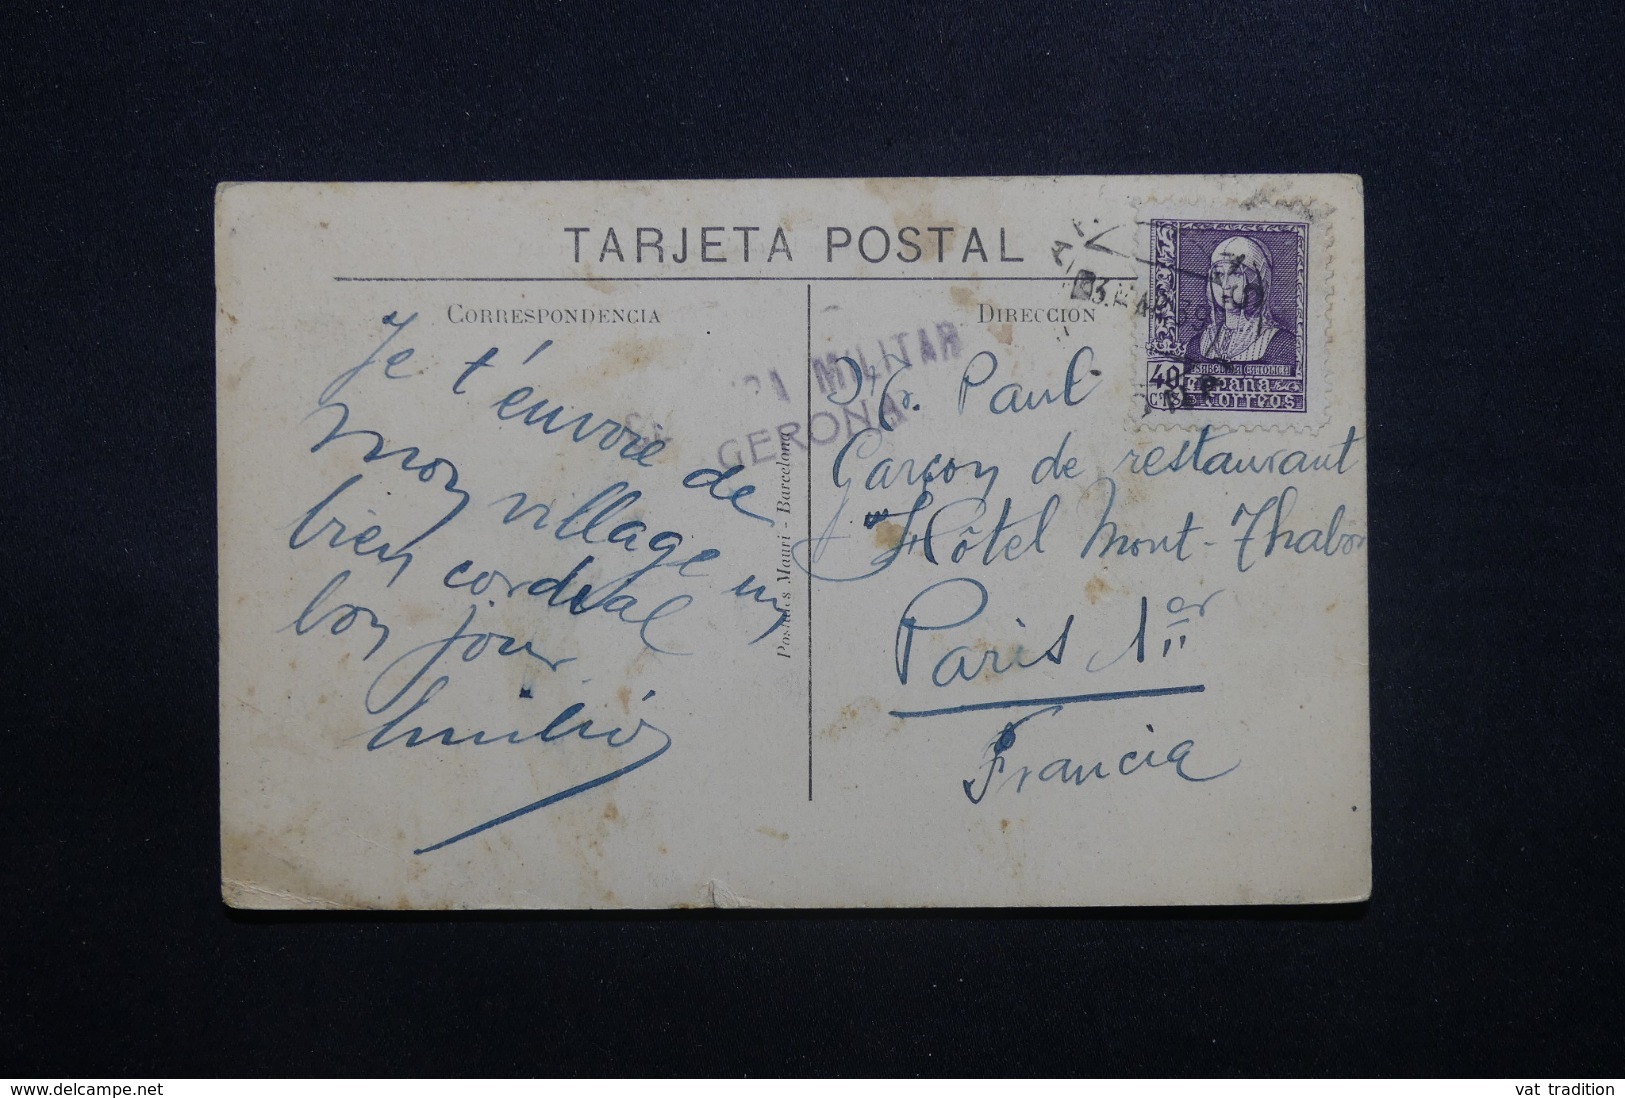 ESPAGNE - Marque De Censure De Gerona Sur Carte Postale De Arbucies Pour Paris En 1939 - L 42583 - Marcas De Censura Republicana